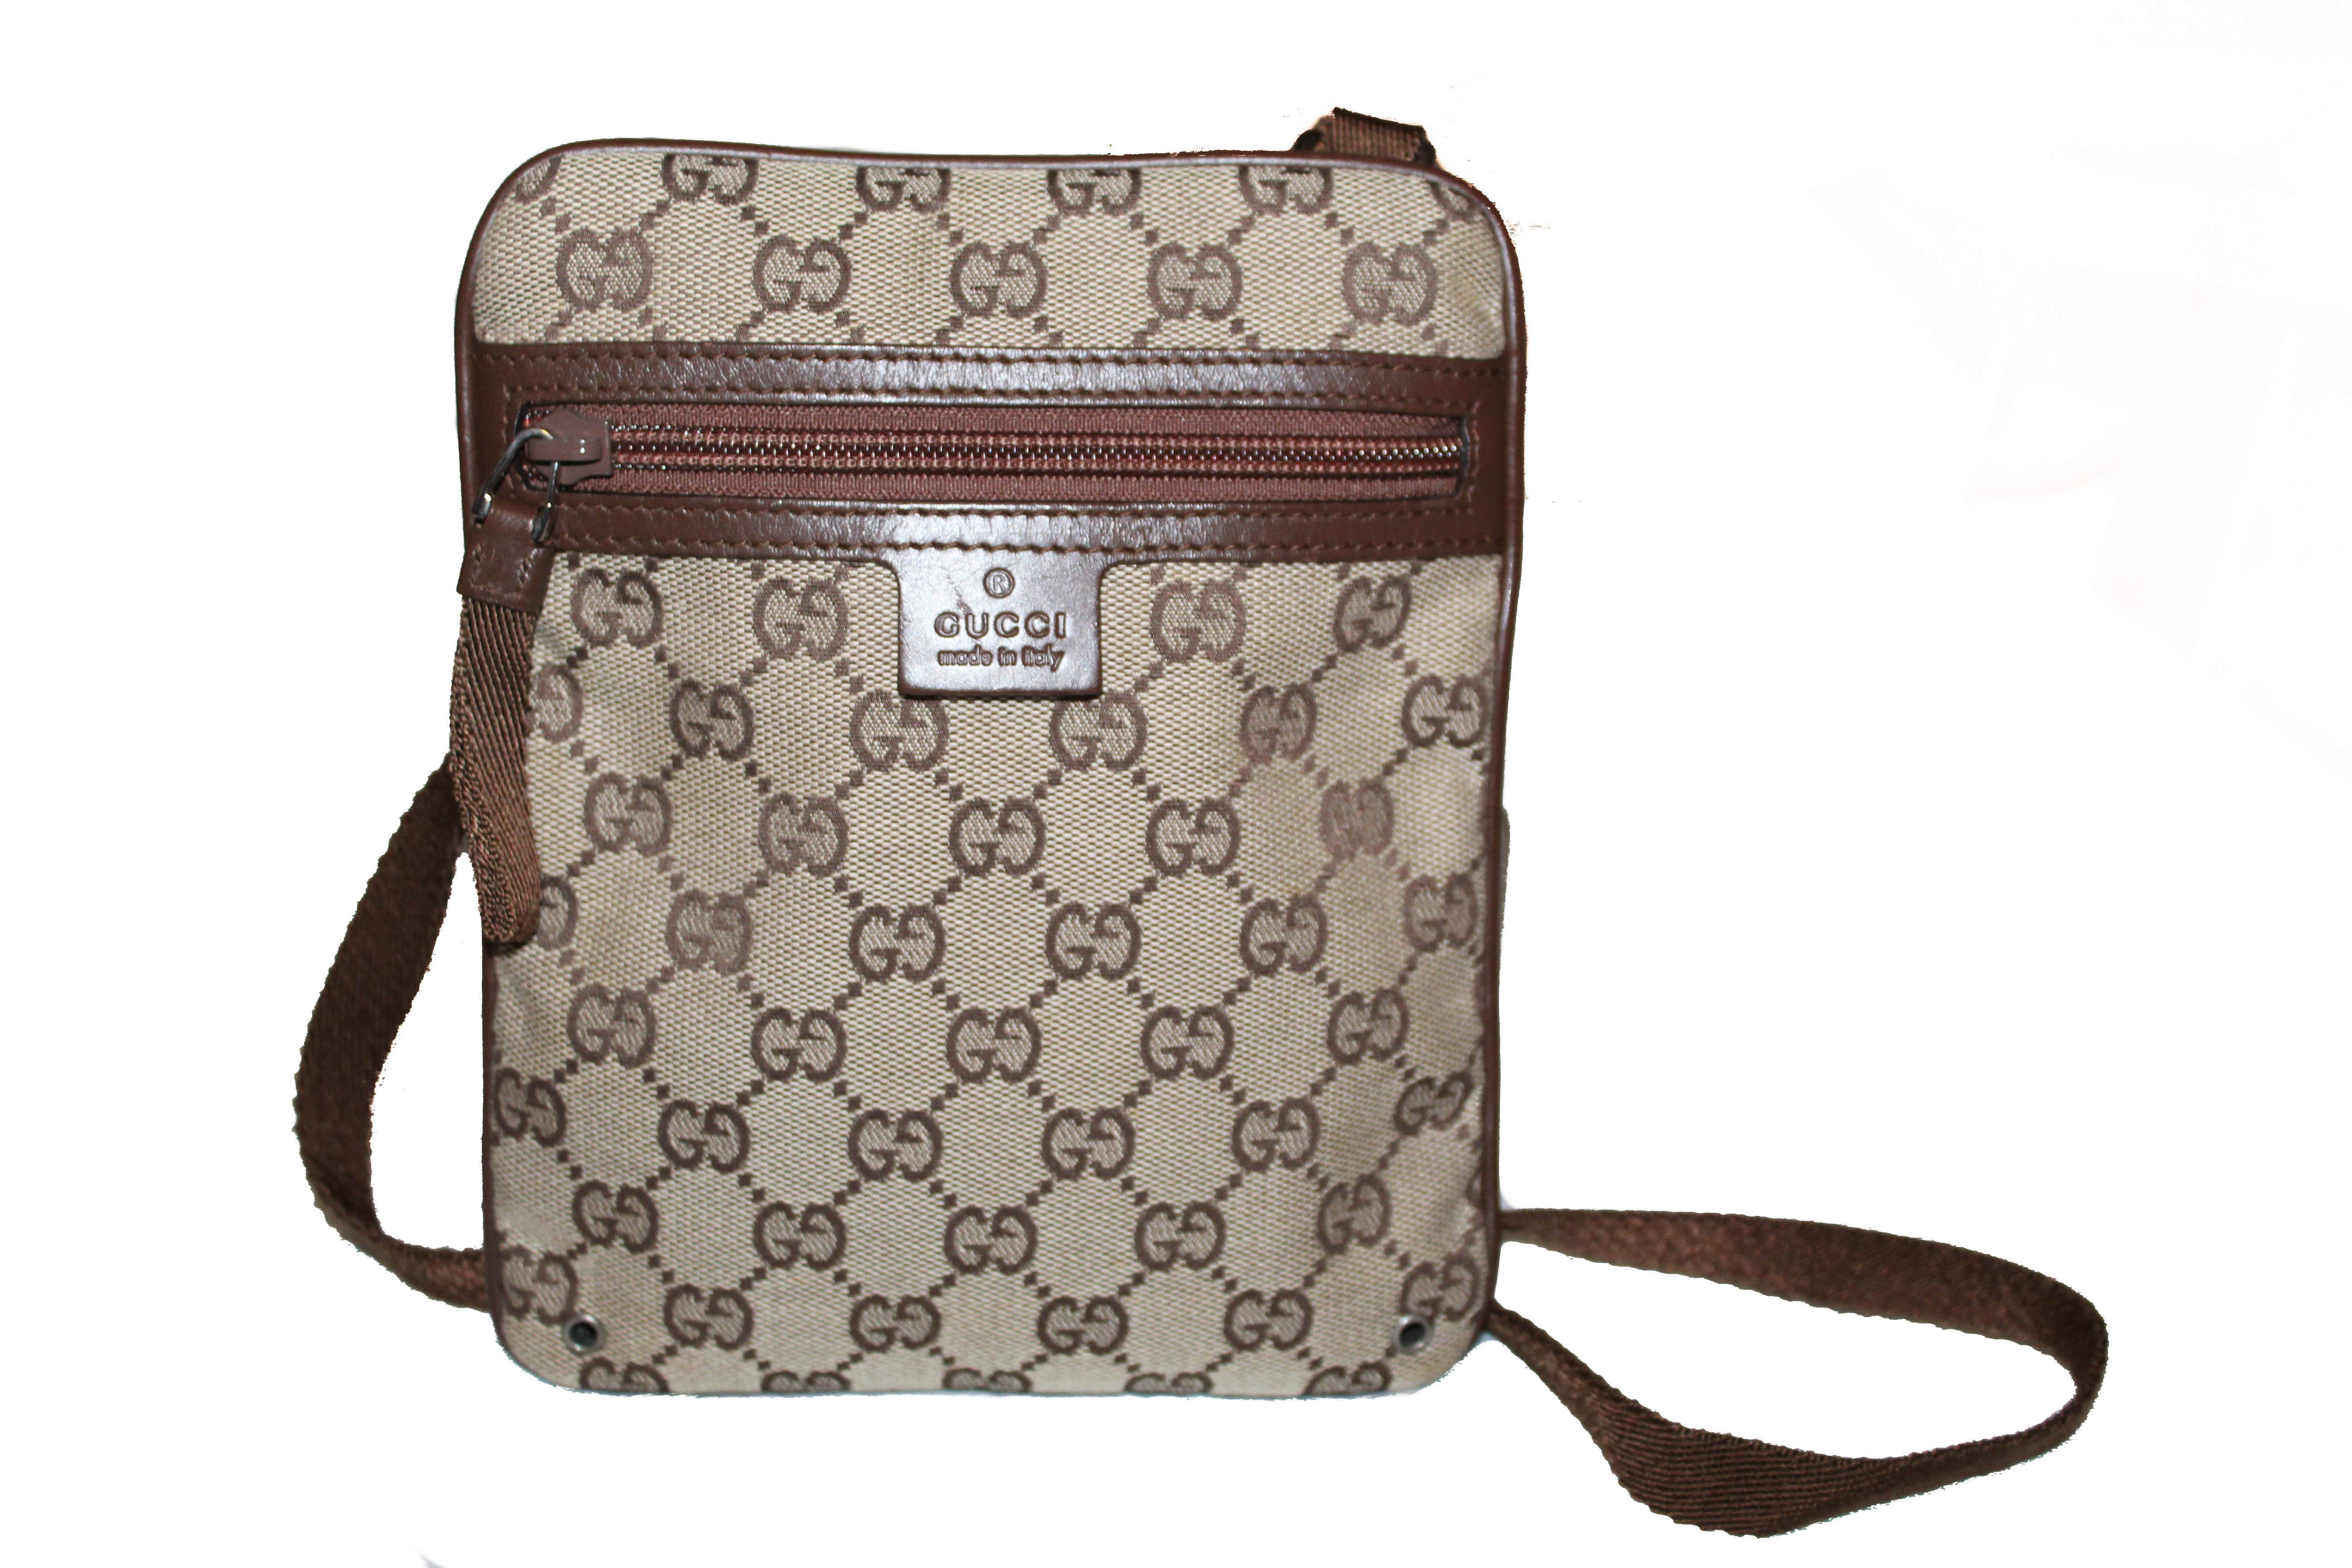 Gucci, Bags, Authentic Gucci Messenger Bag